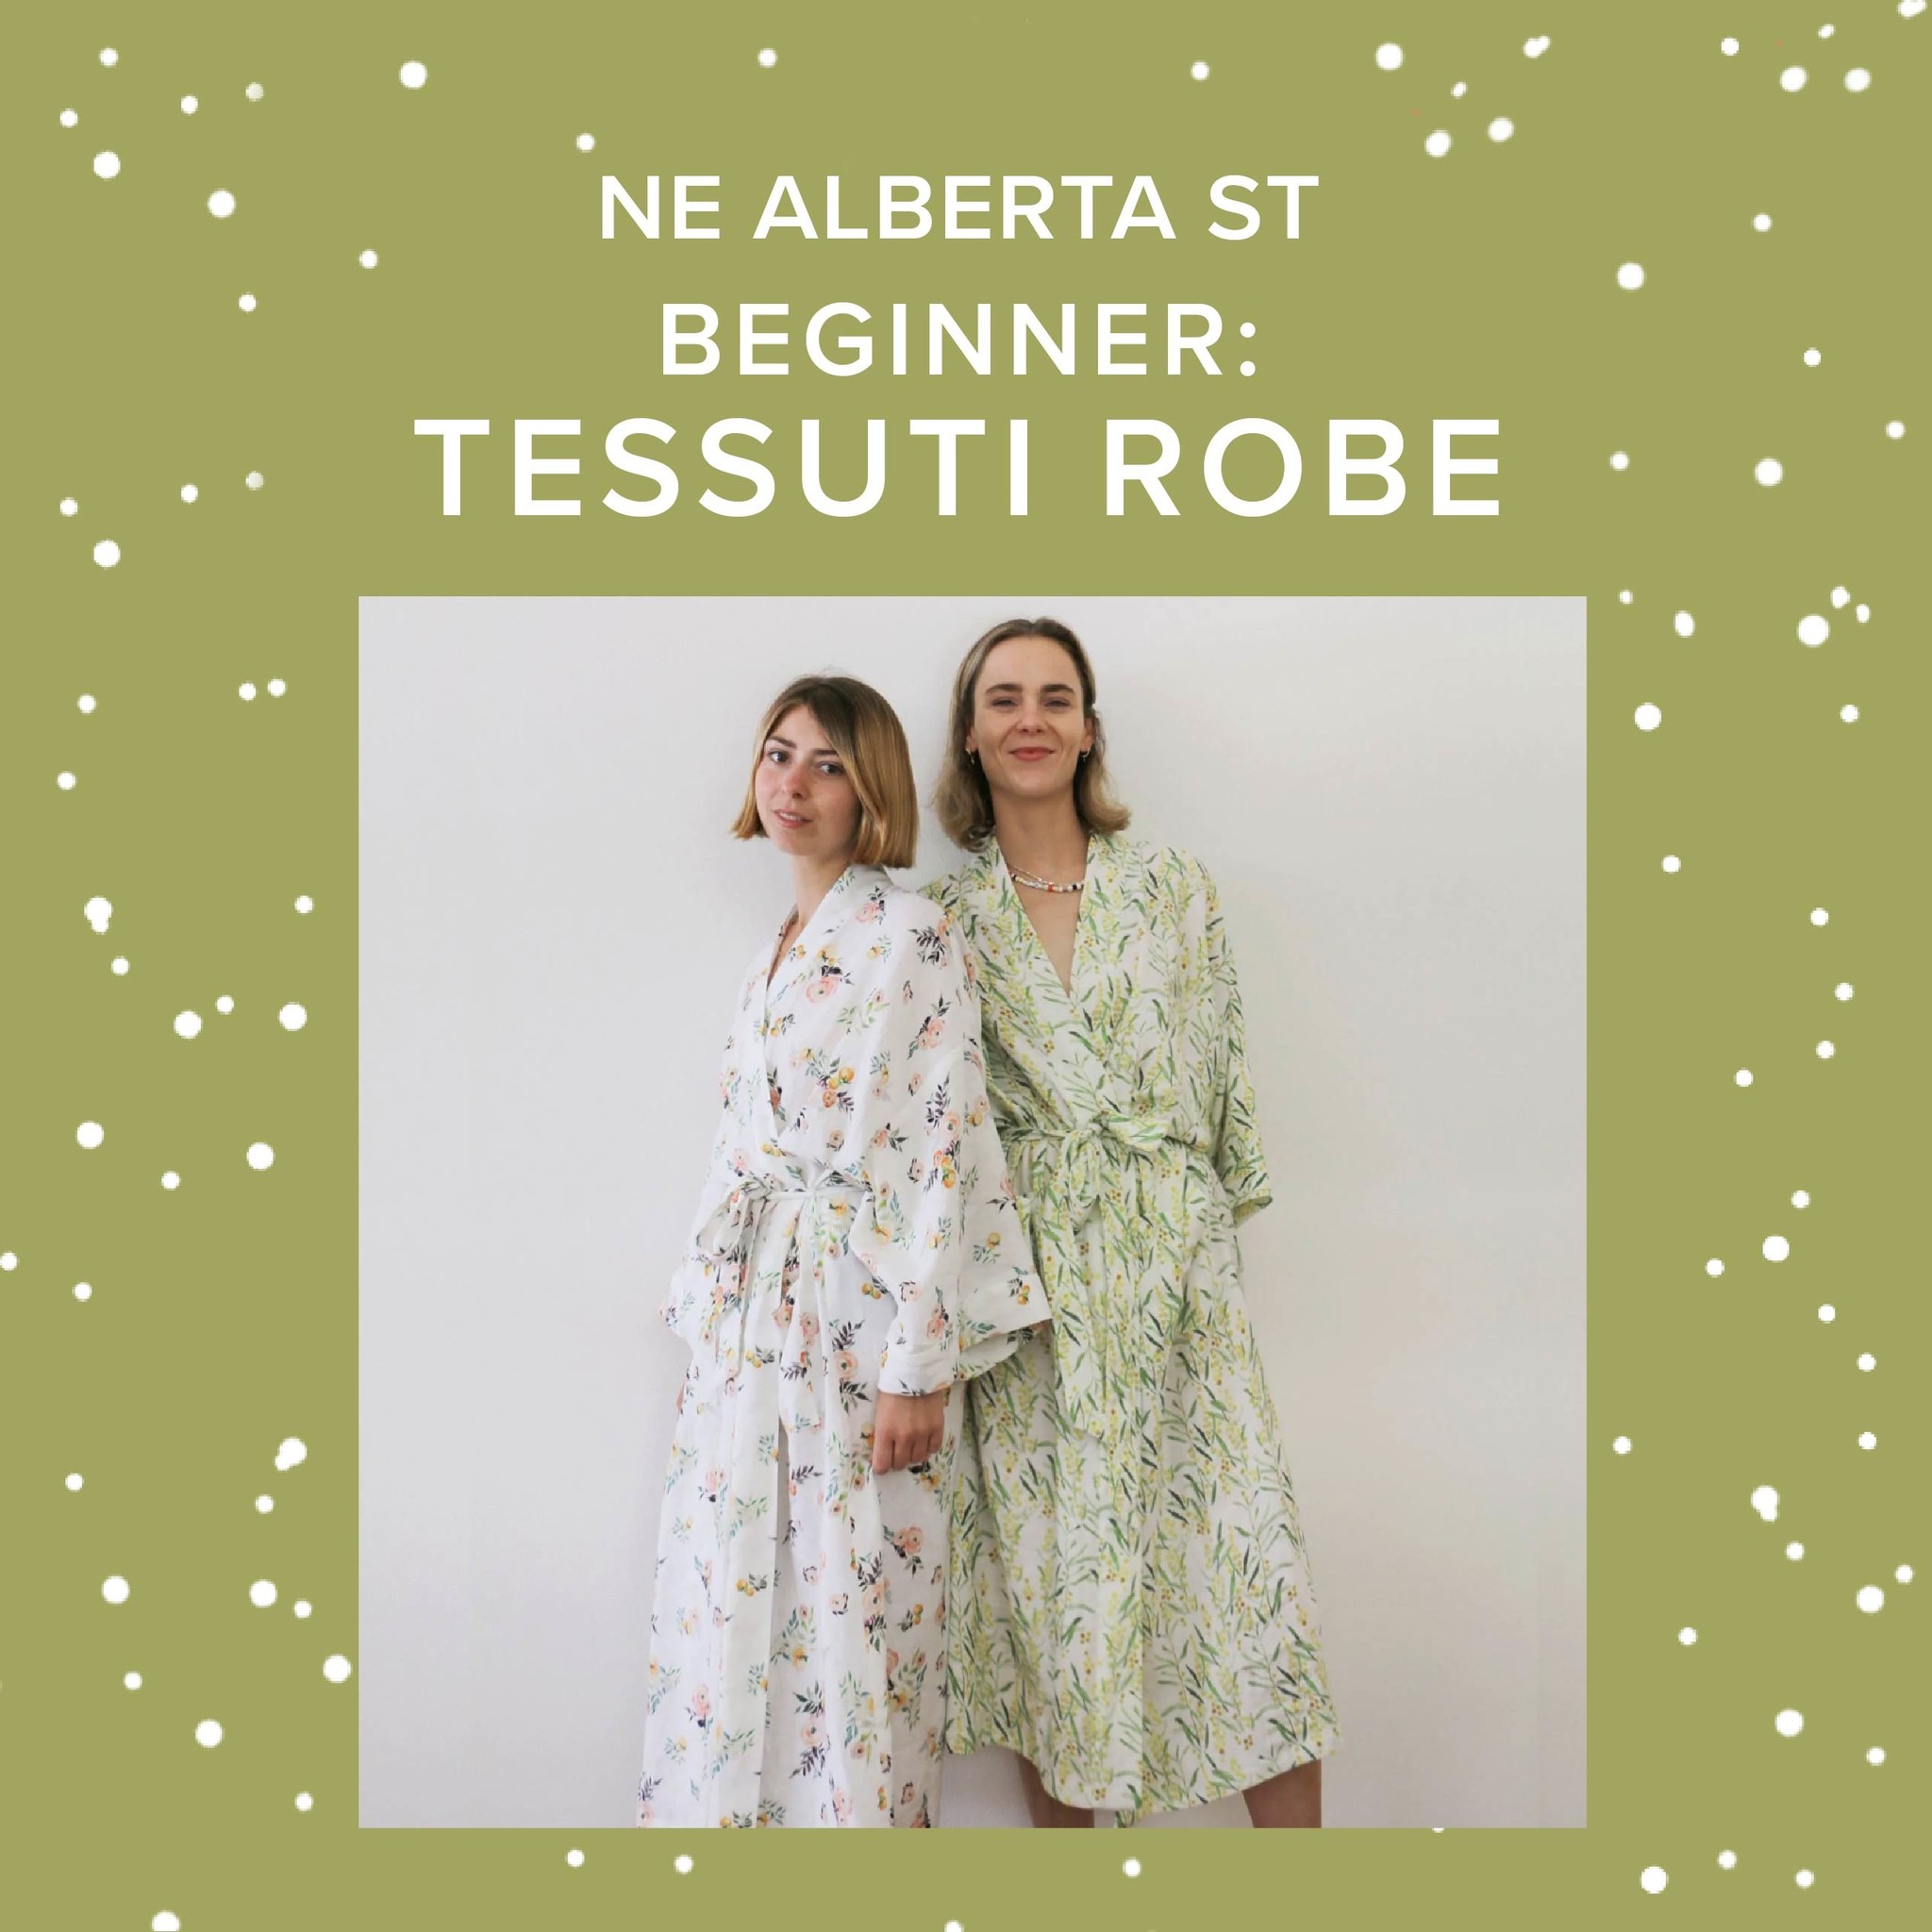 Rachel Halse Beginner: Tessuti Robe,  Alberta St. Store, Thursdays, March 23rd, 30th, & April 6th, 5:30pm-8:30pm